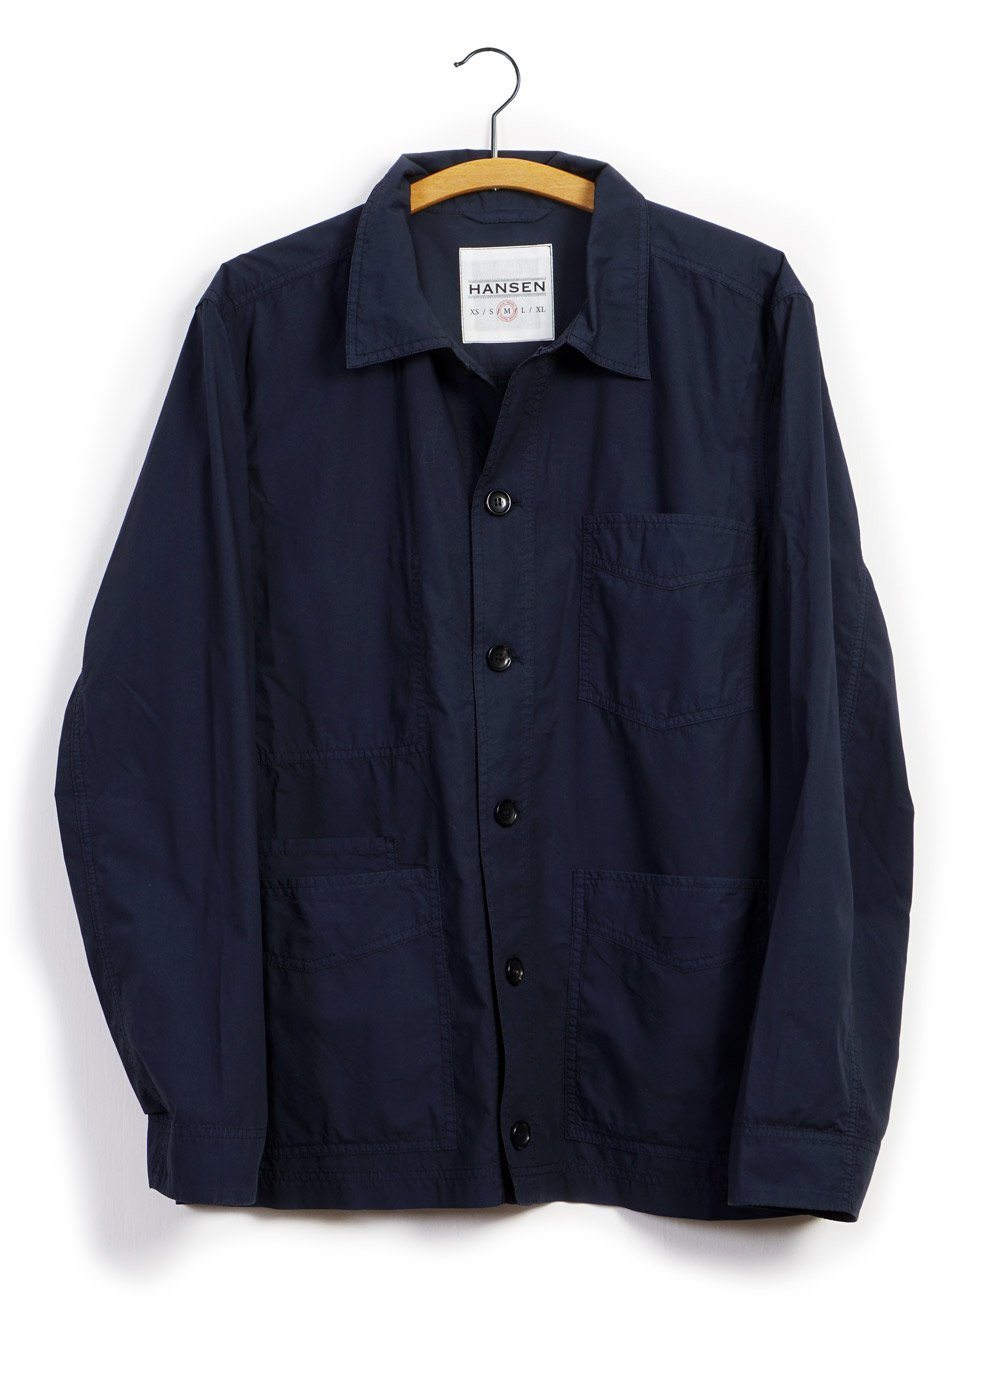 ANDERS | Light Work Jacket | Navy -HANSEN Garments- HANSEN Garments